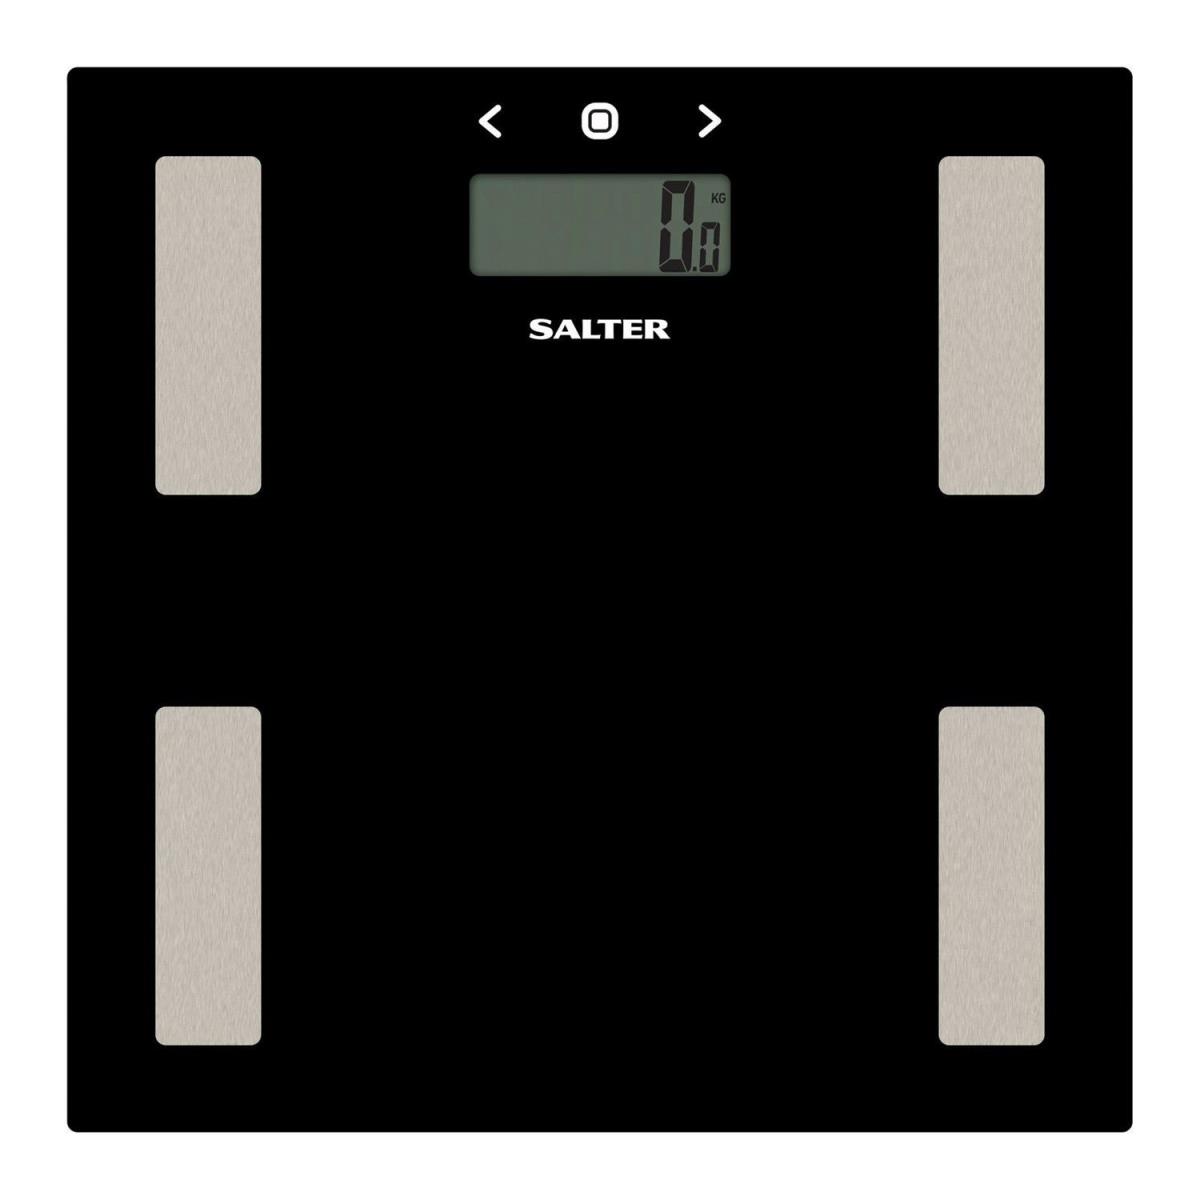 Salter - Body analysis scale BMI Max 180 kg